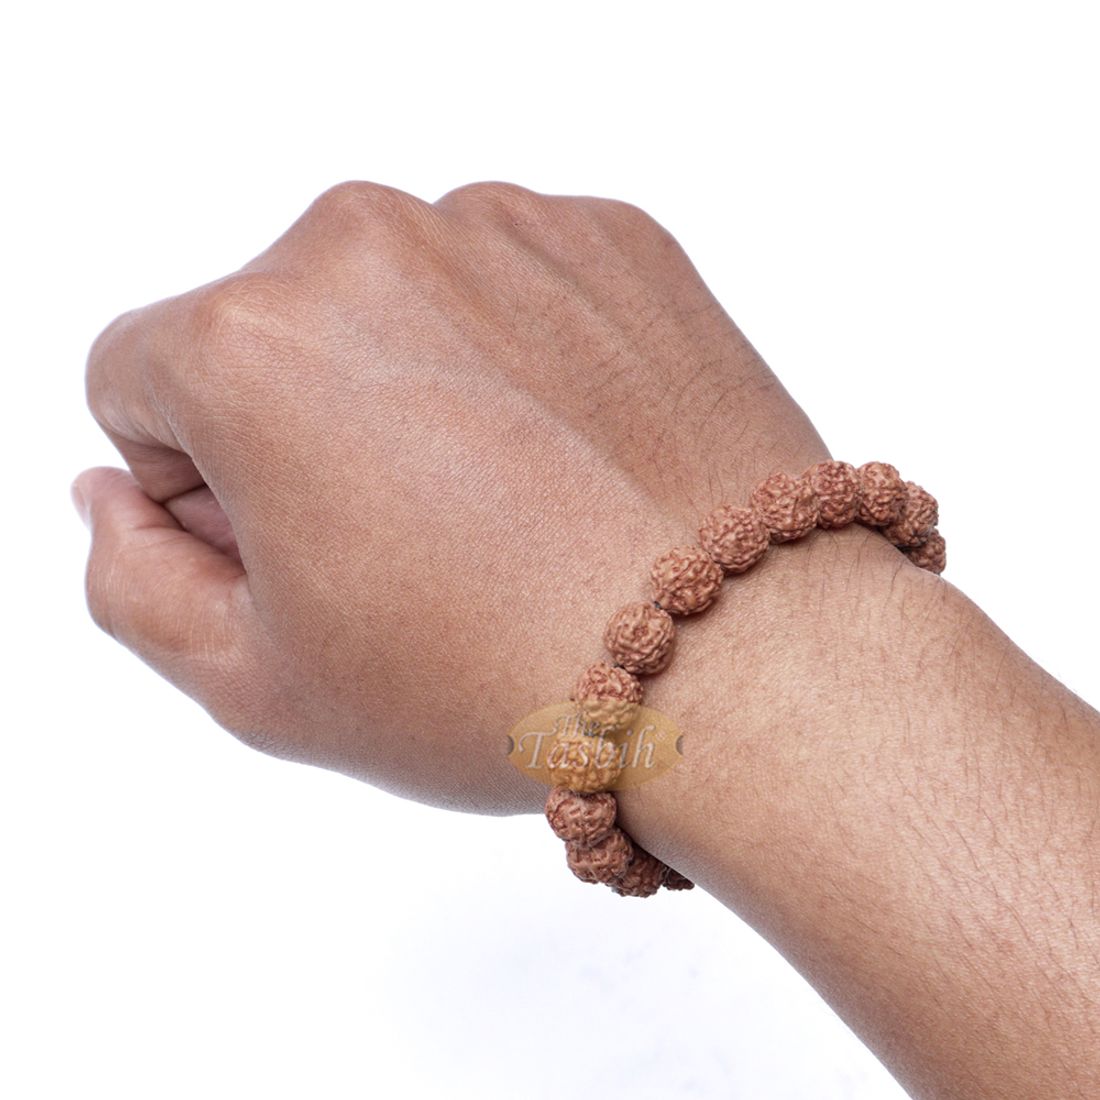 Rudraksha Beaded Bracelet – Jenitri Seed Healing Prayer Beads with 25 Beads on Elastic Cord